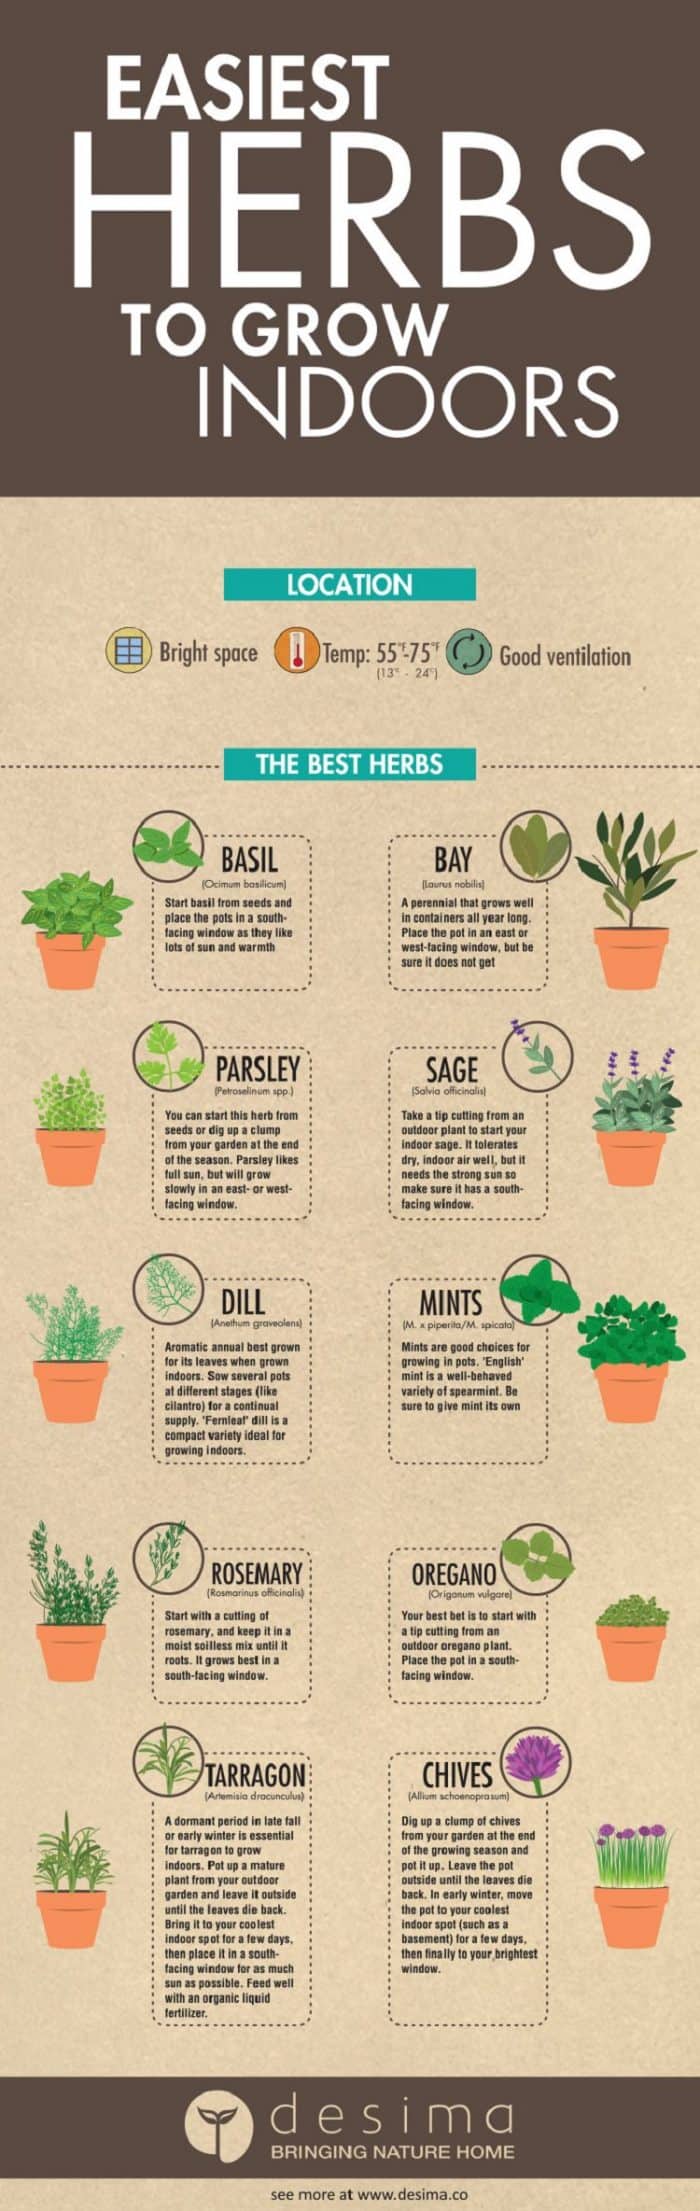 10 easy herbs to grow indoors